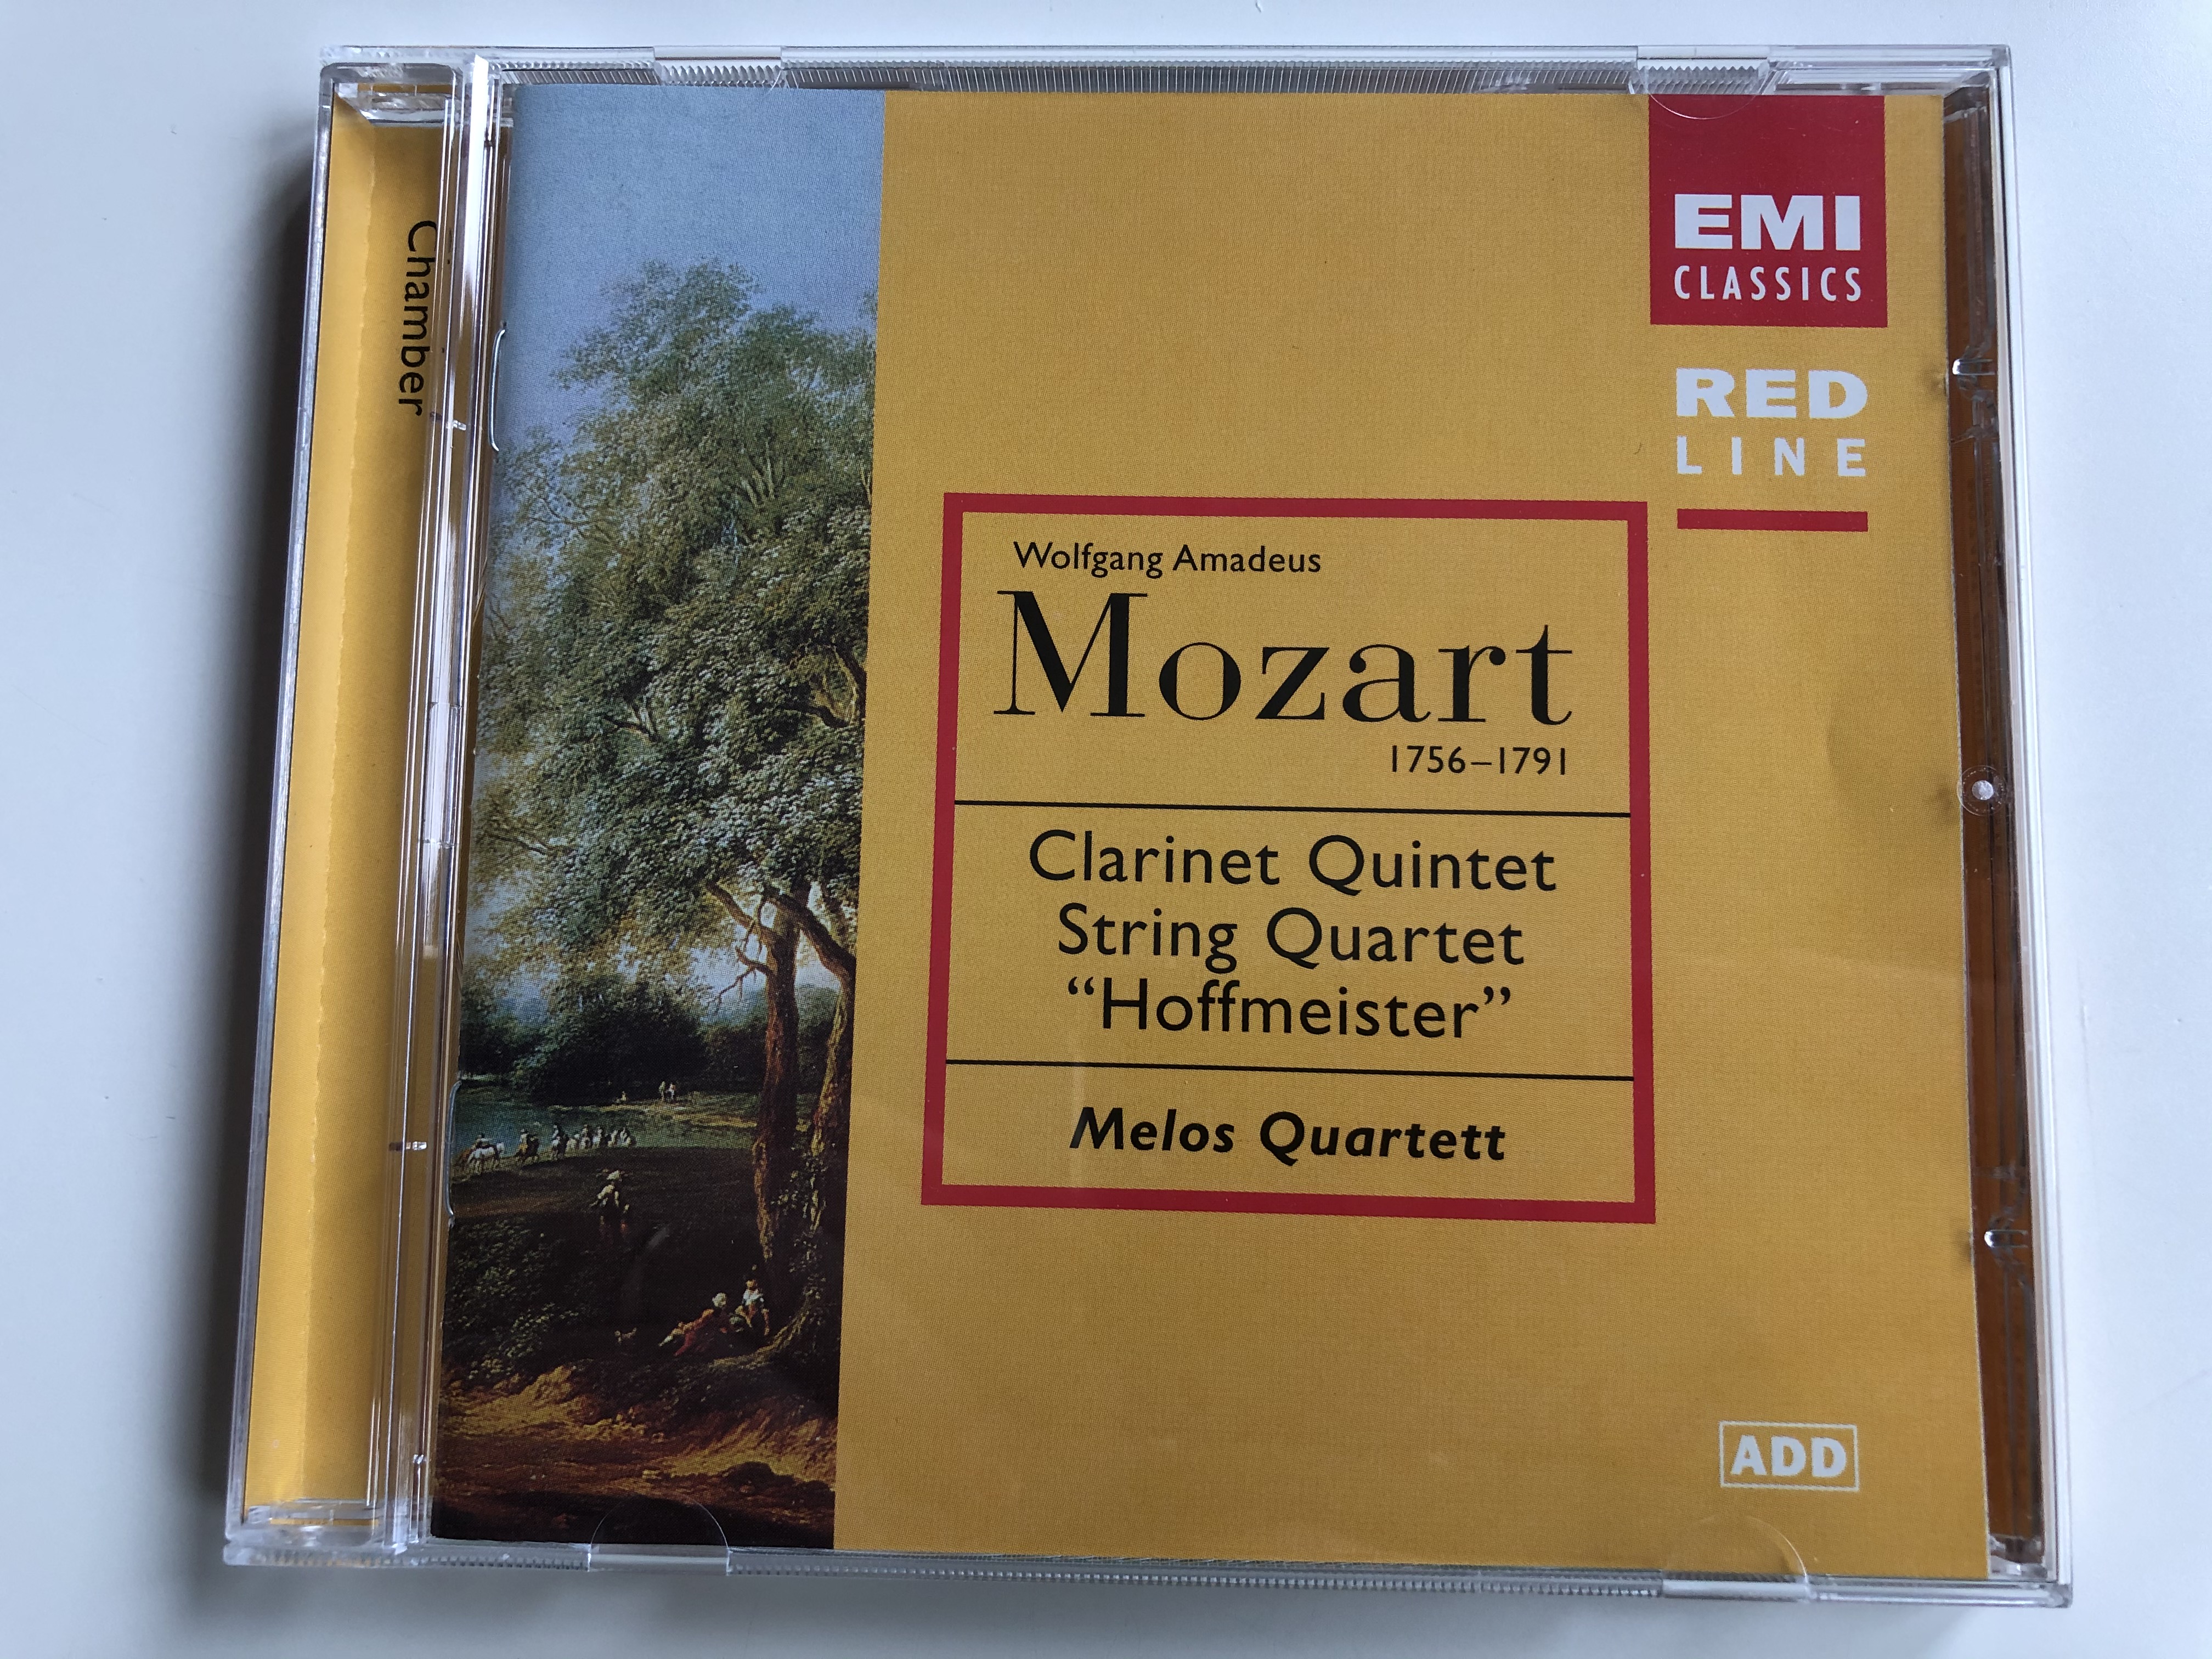 wolfgang-amadeus-mozart-1756-1791-clarinet-quintet-string-quartet-hoffmeister-melos-quartett-red-line-emi-classics-audio-cd-1998-stereo-724357256629-1-.jpg